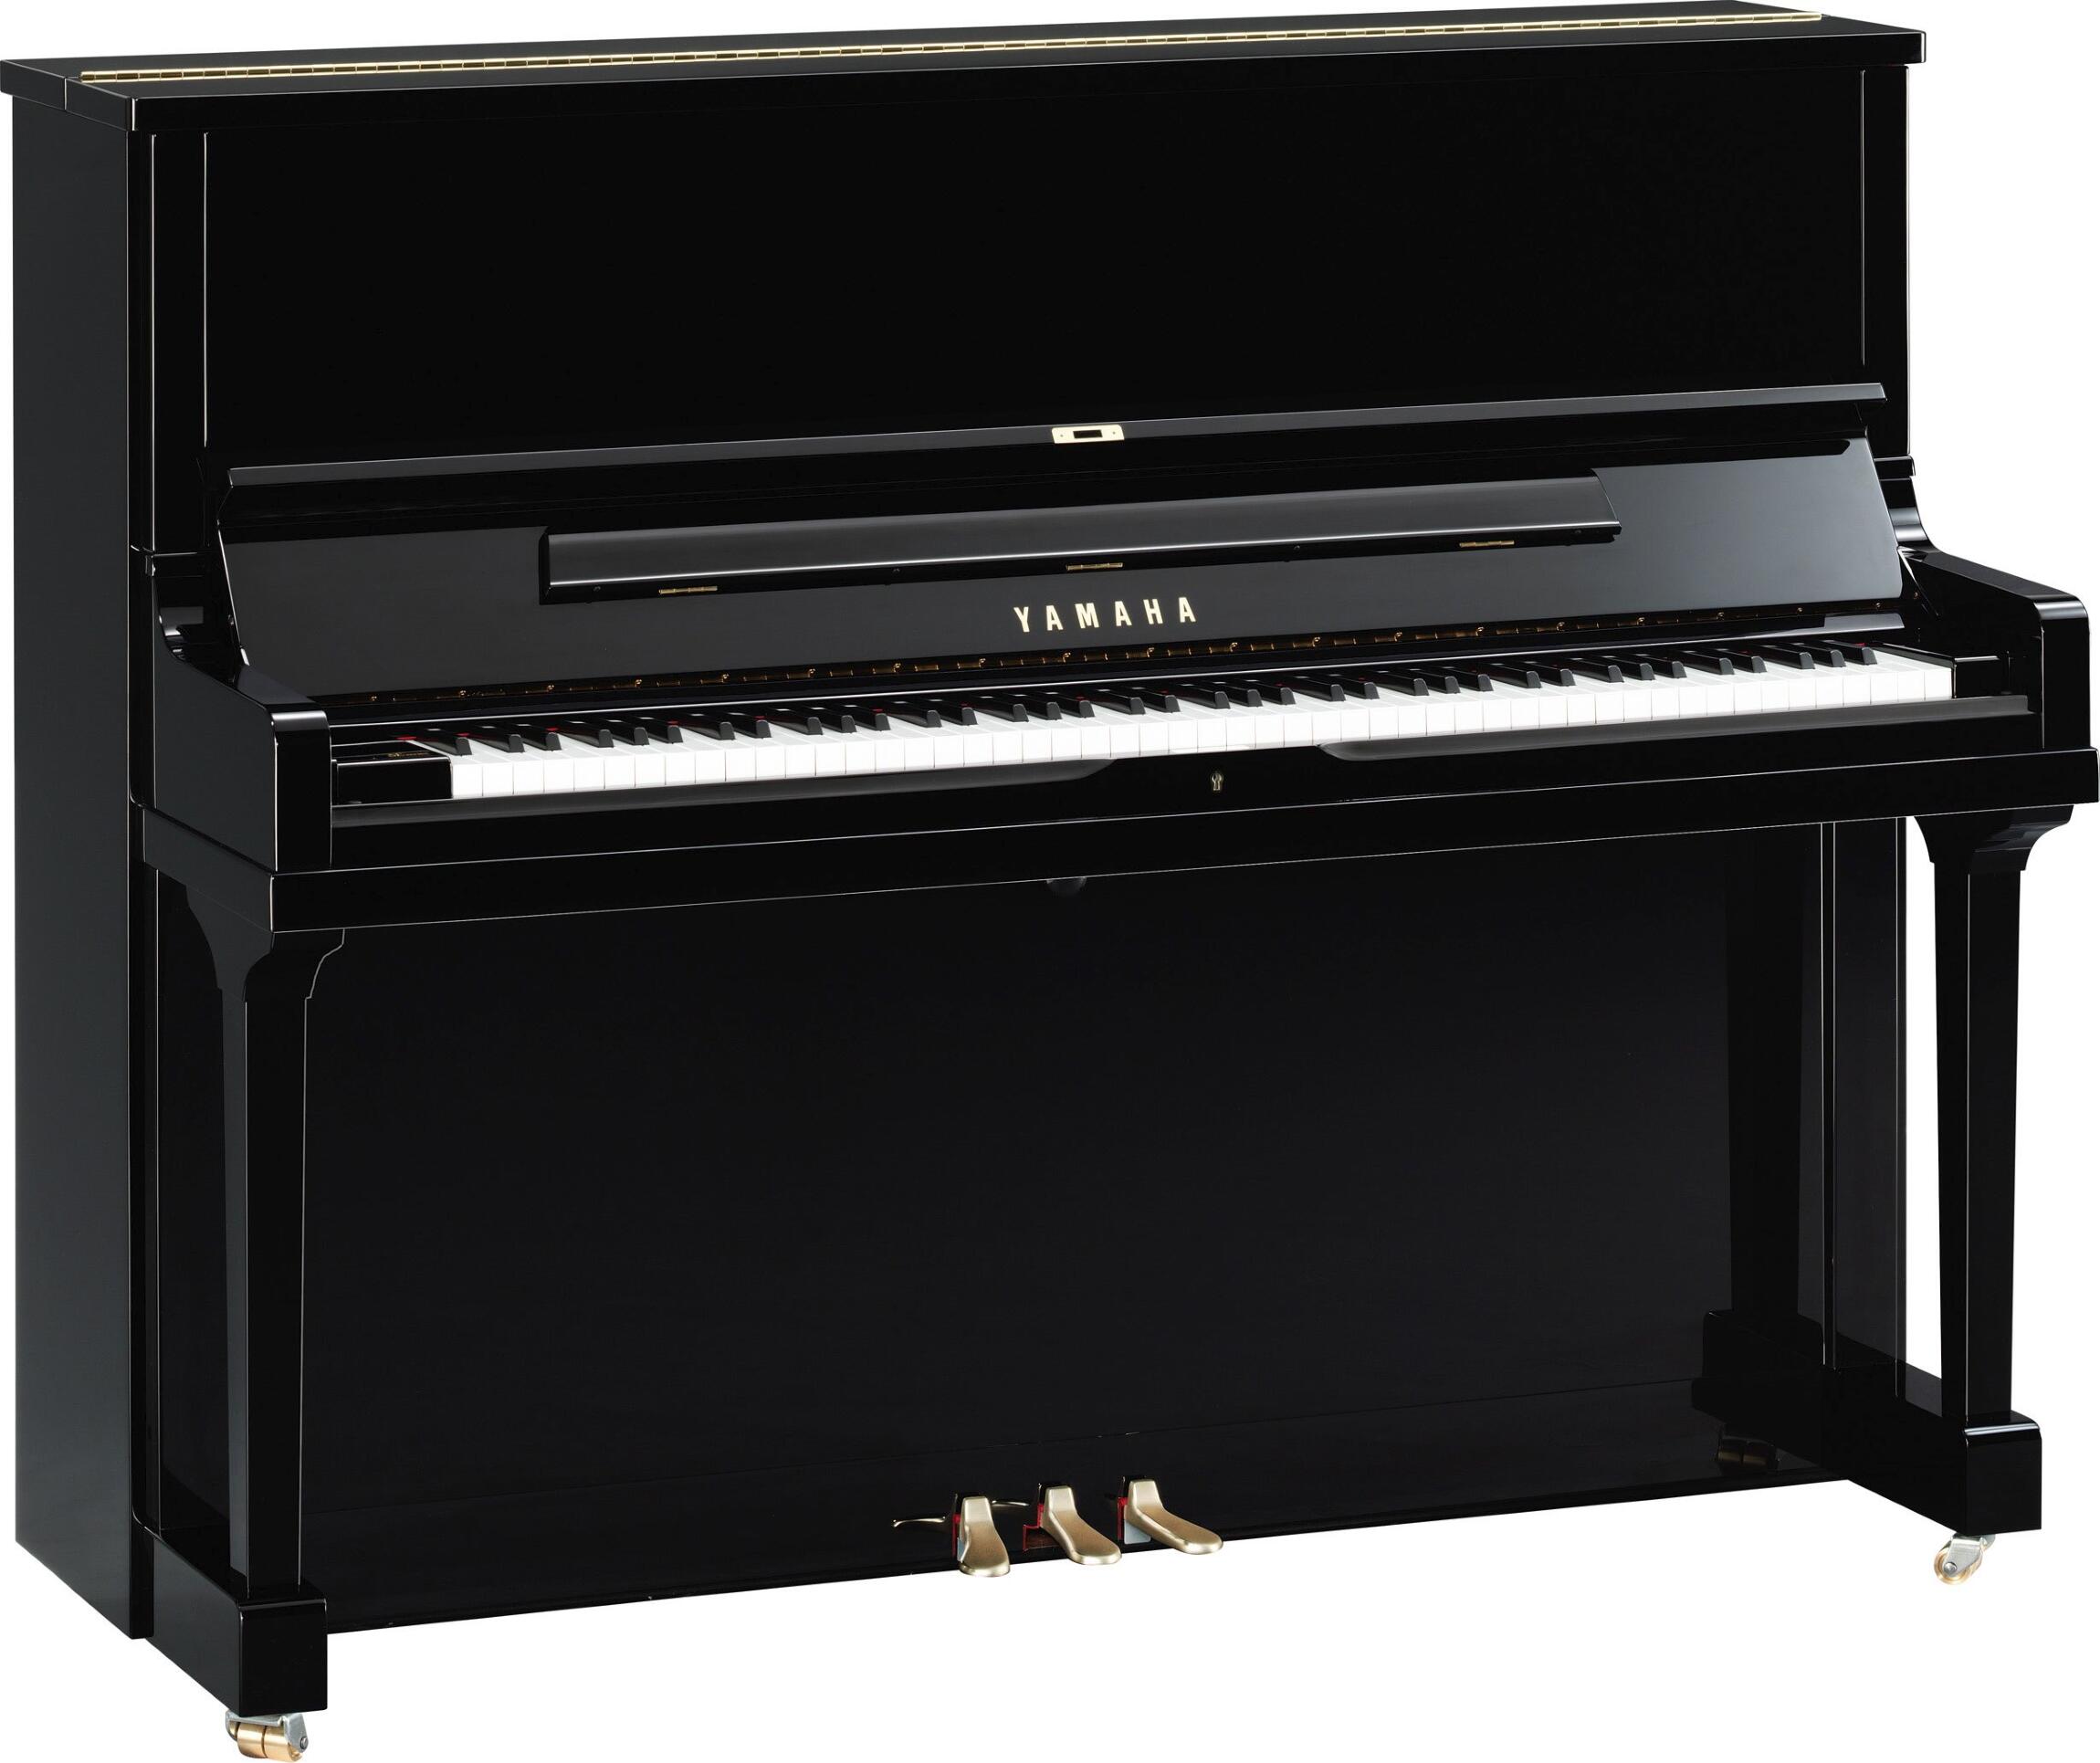 Yamaha Pianos Silent SE122 SH3 PE Silent Noir poli-brillant 122 cm : photo 1